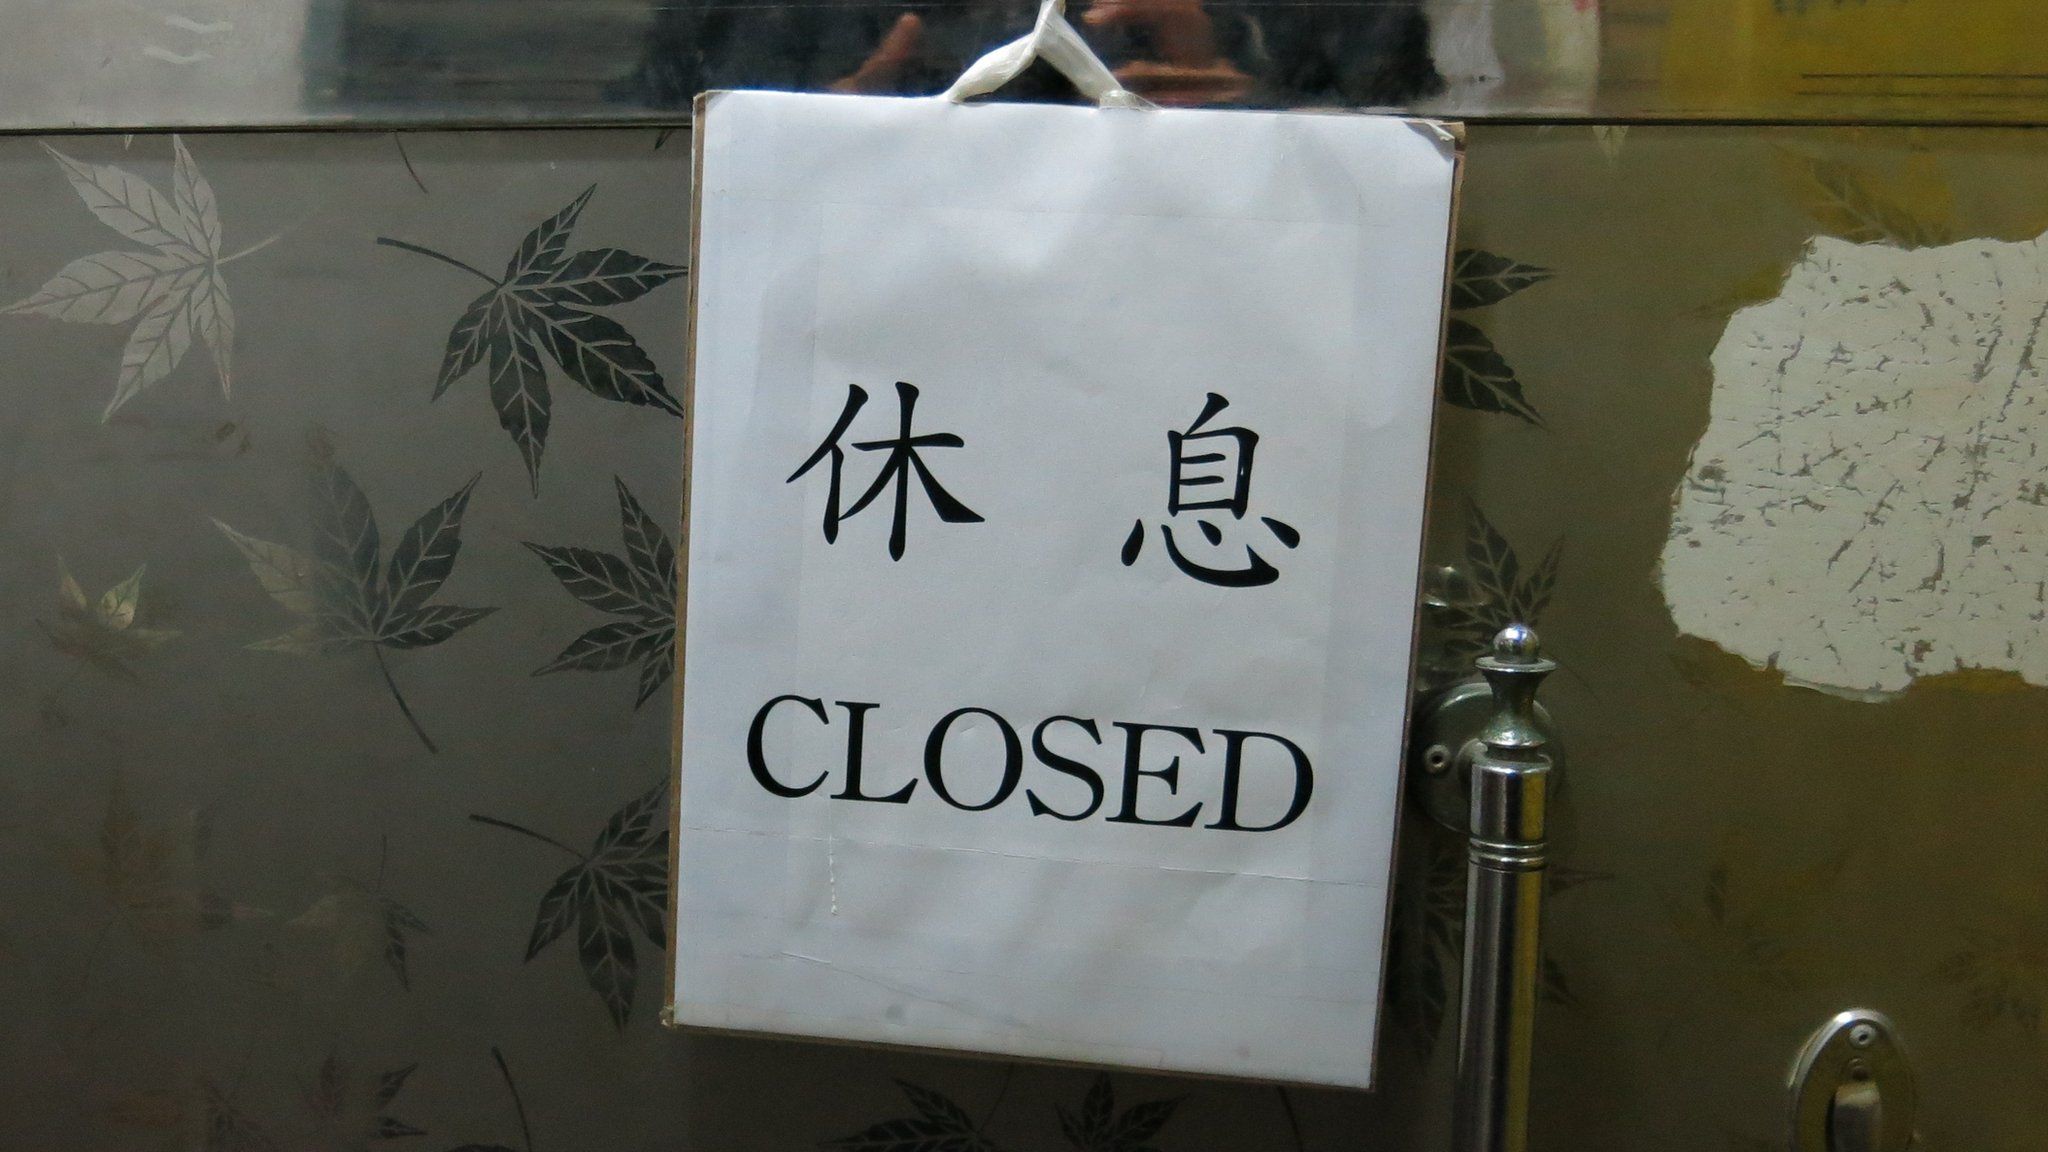 Bookshop 'closed' sign on the door